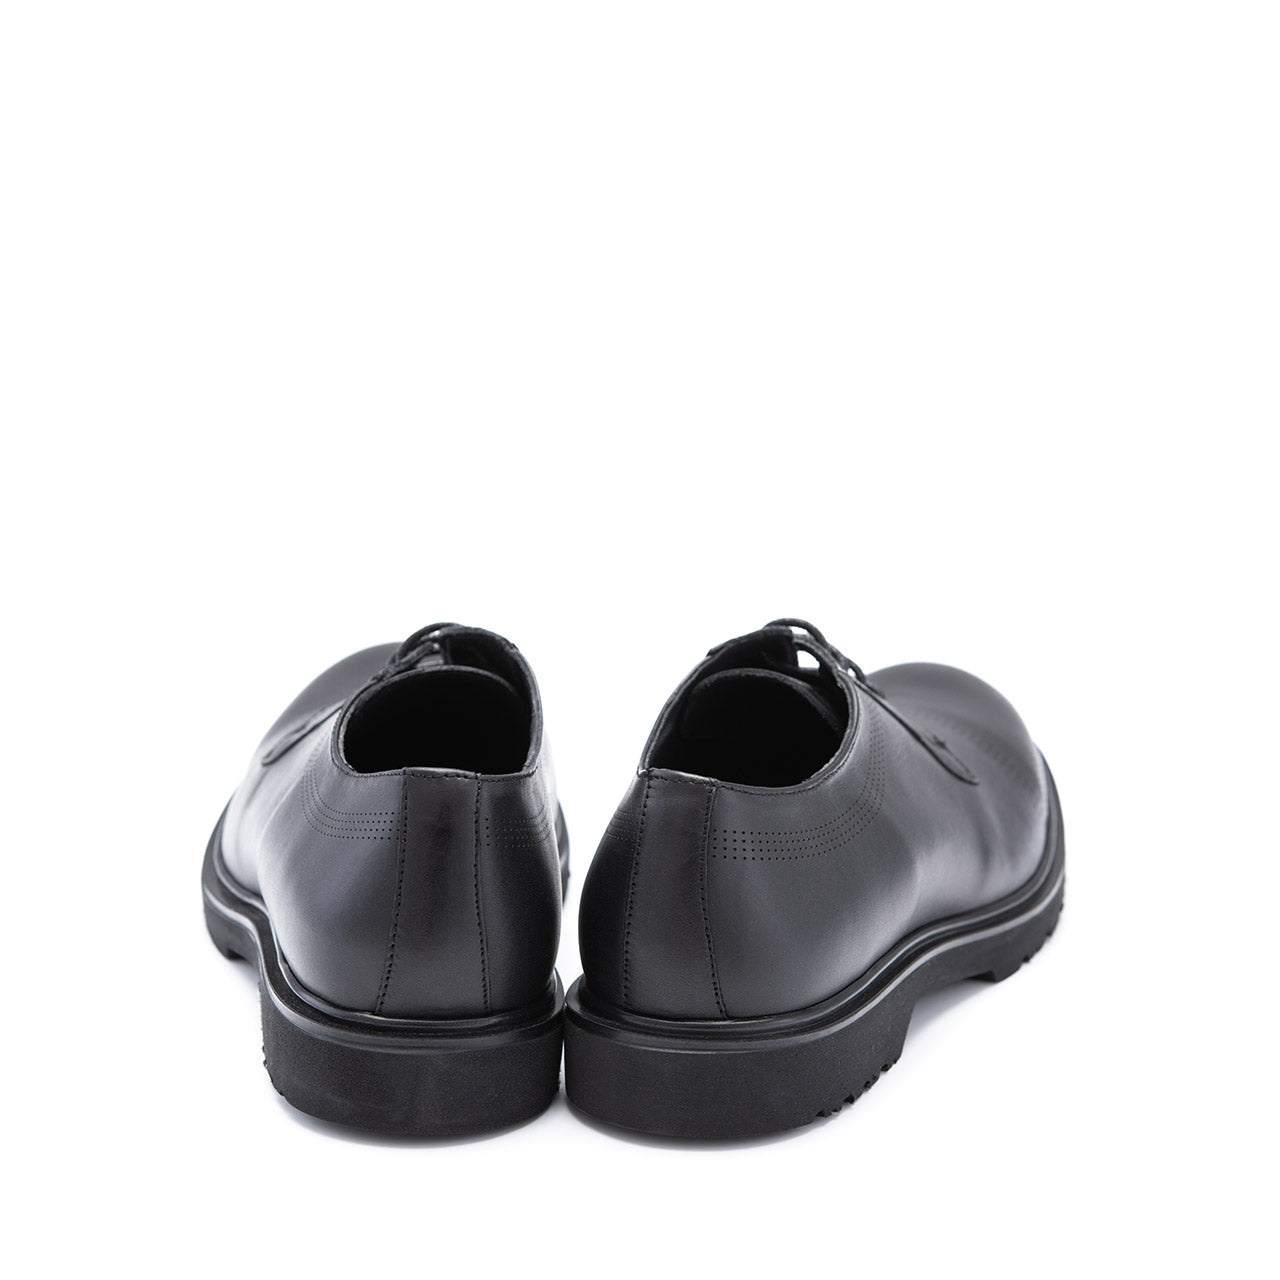 Pantofi eleganti barbati Viktor negru gravat